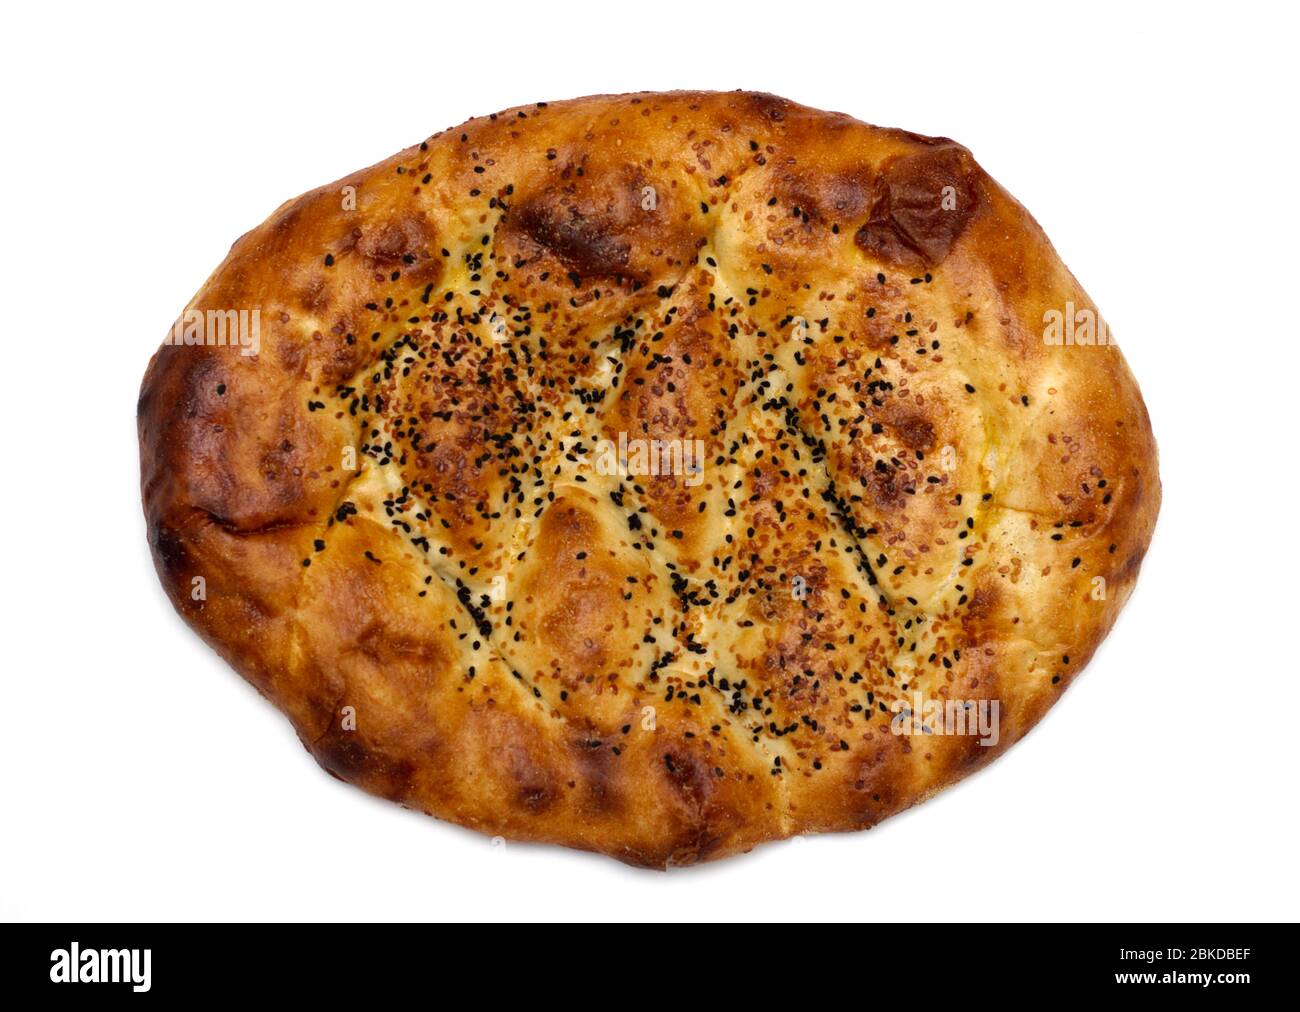 Ramazan pidesi, Turkish ramadan bread Stock Photo